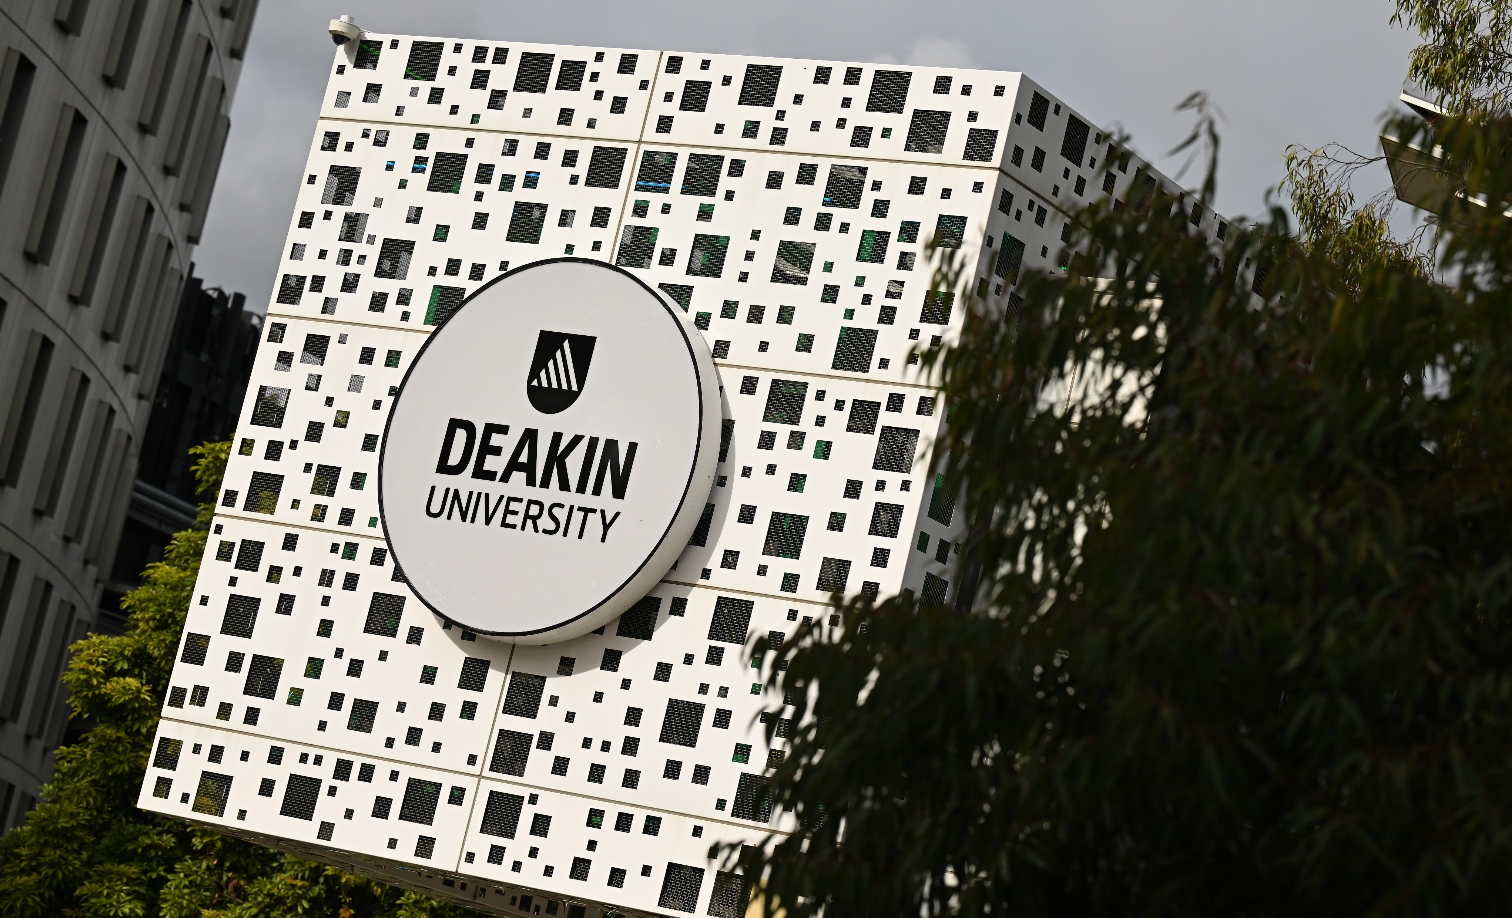 “A disgrace”: Deakin University admits to multi-million dollar wage theft